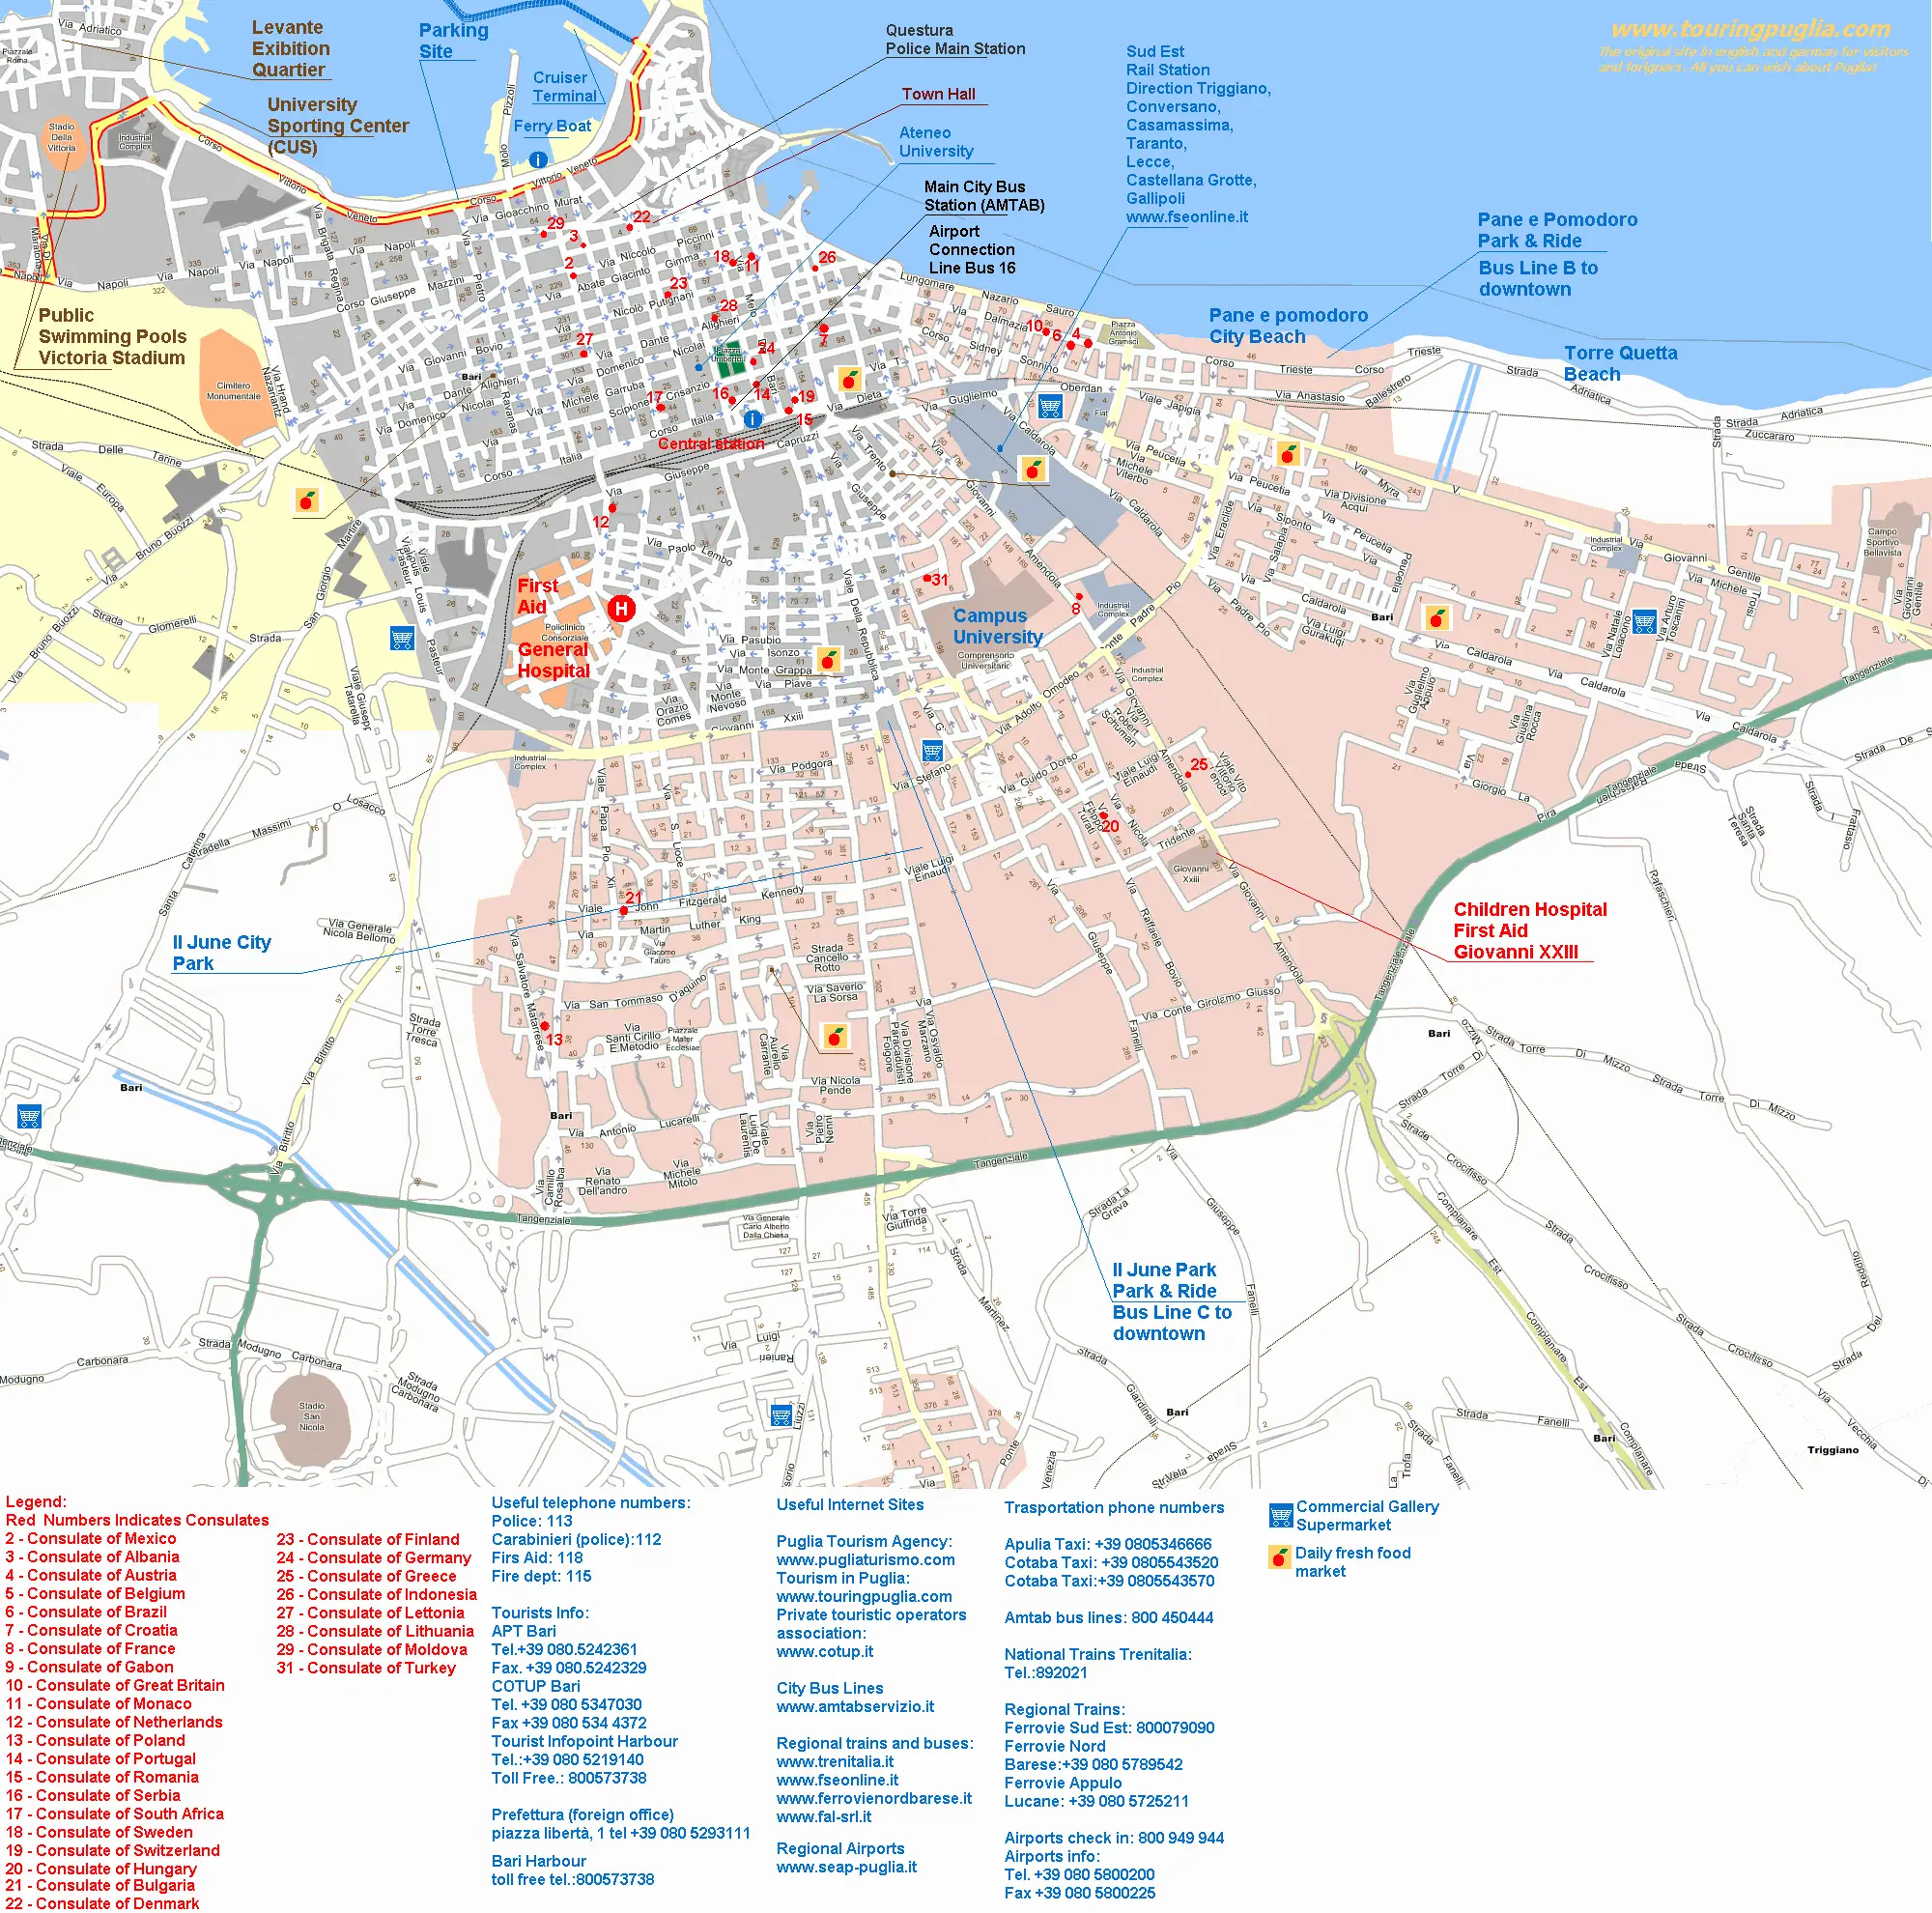 Bari Detailed City Map